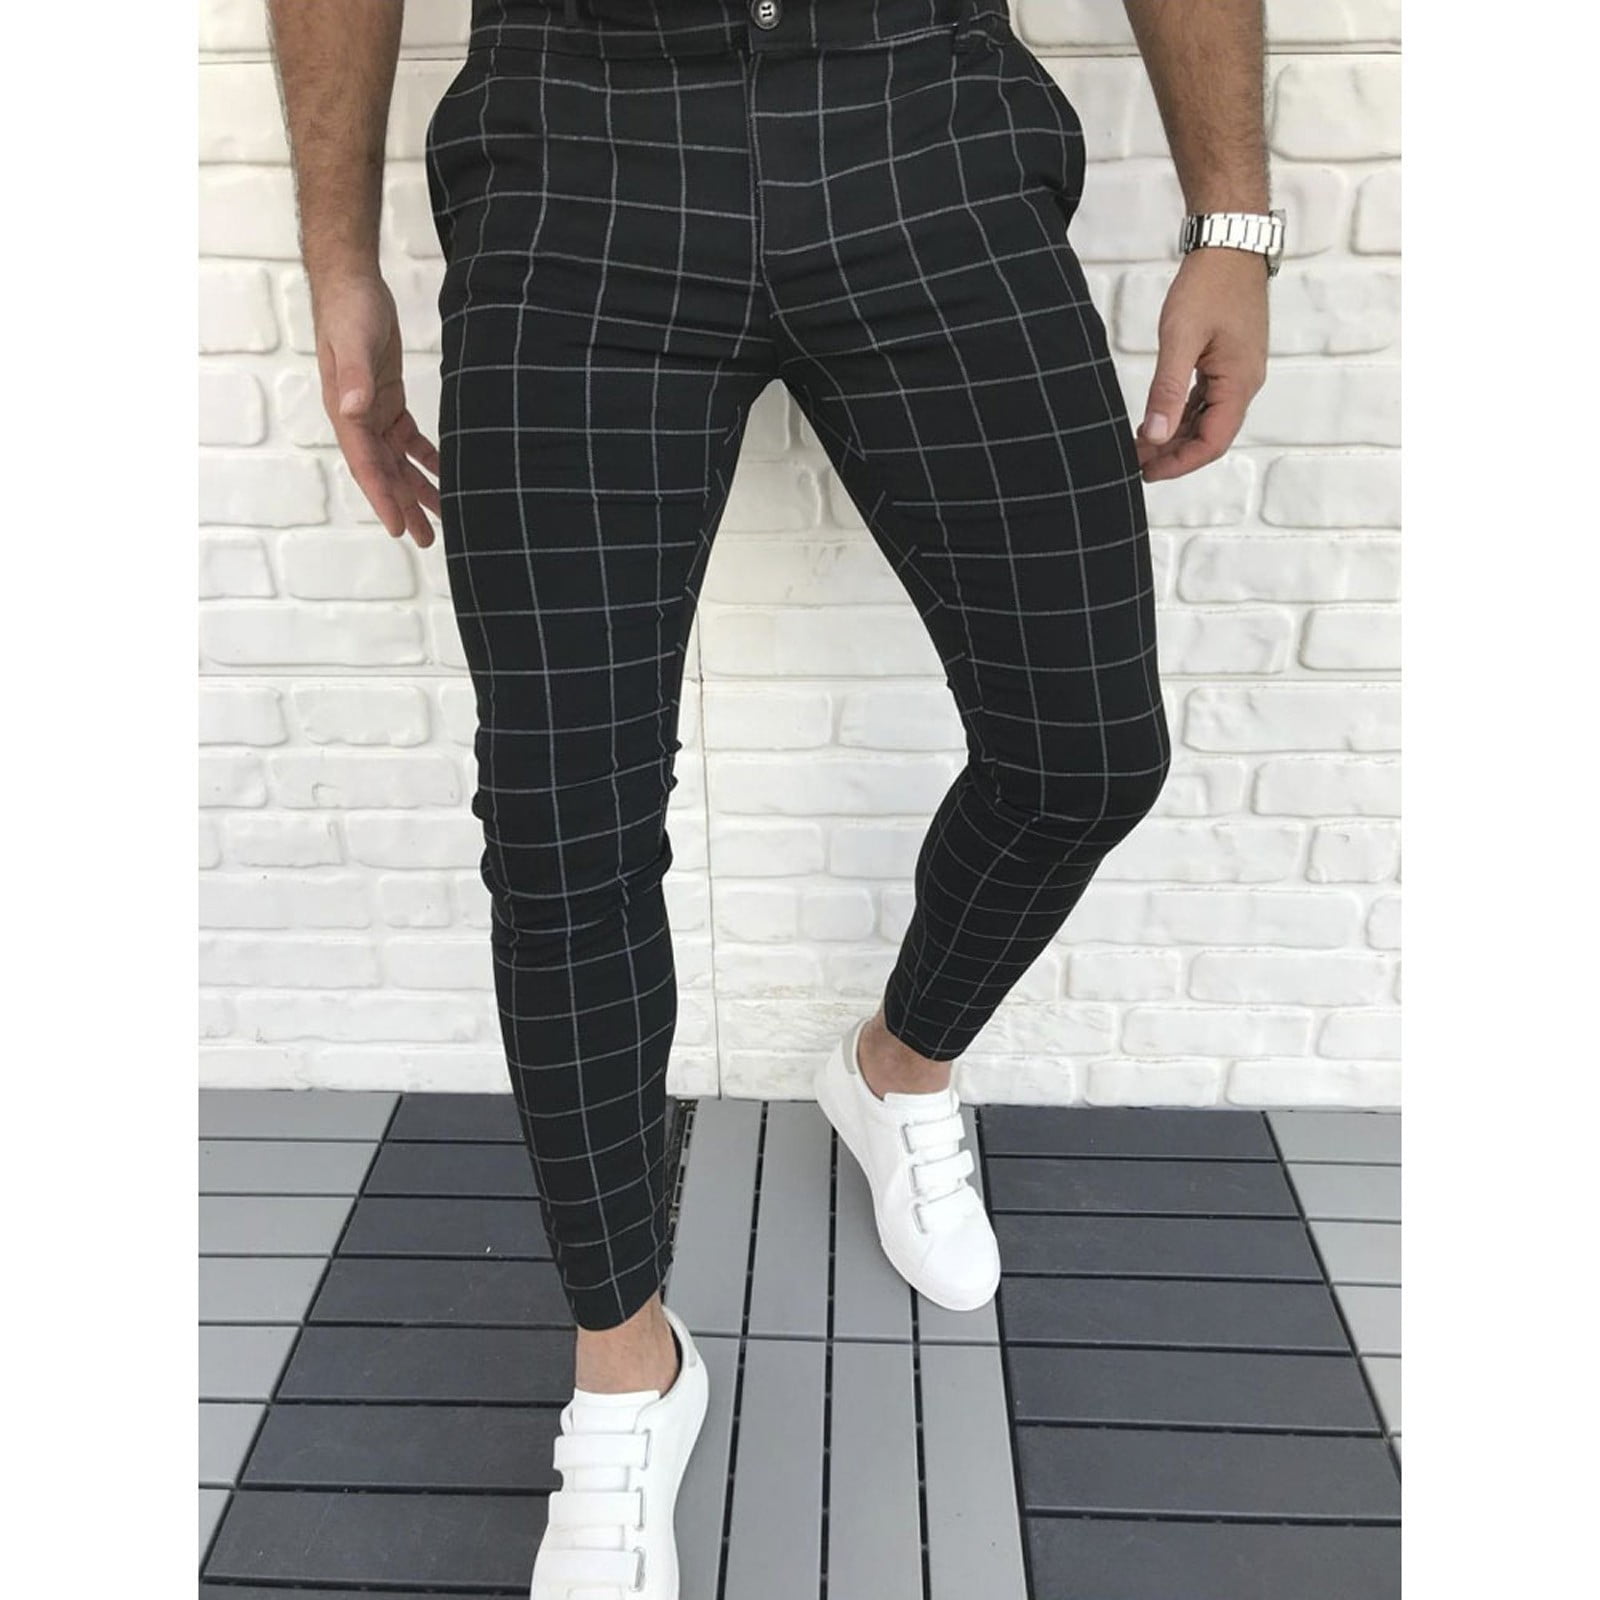 Greyish Black Soft Cotton Pants For Men Casual Wear #5103